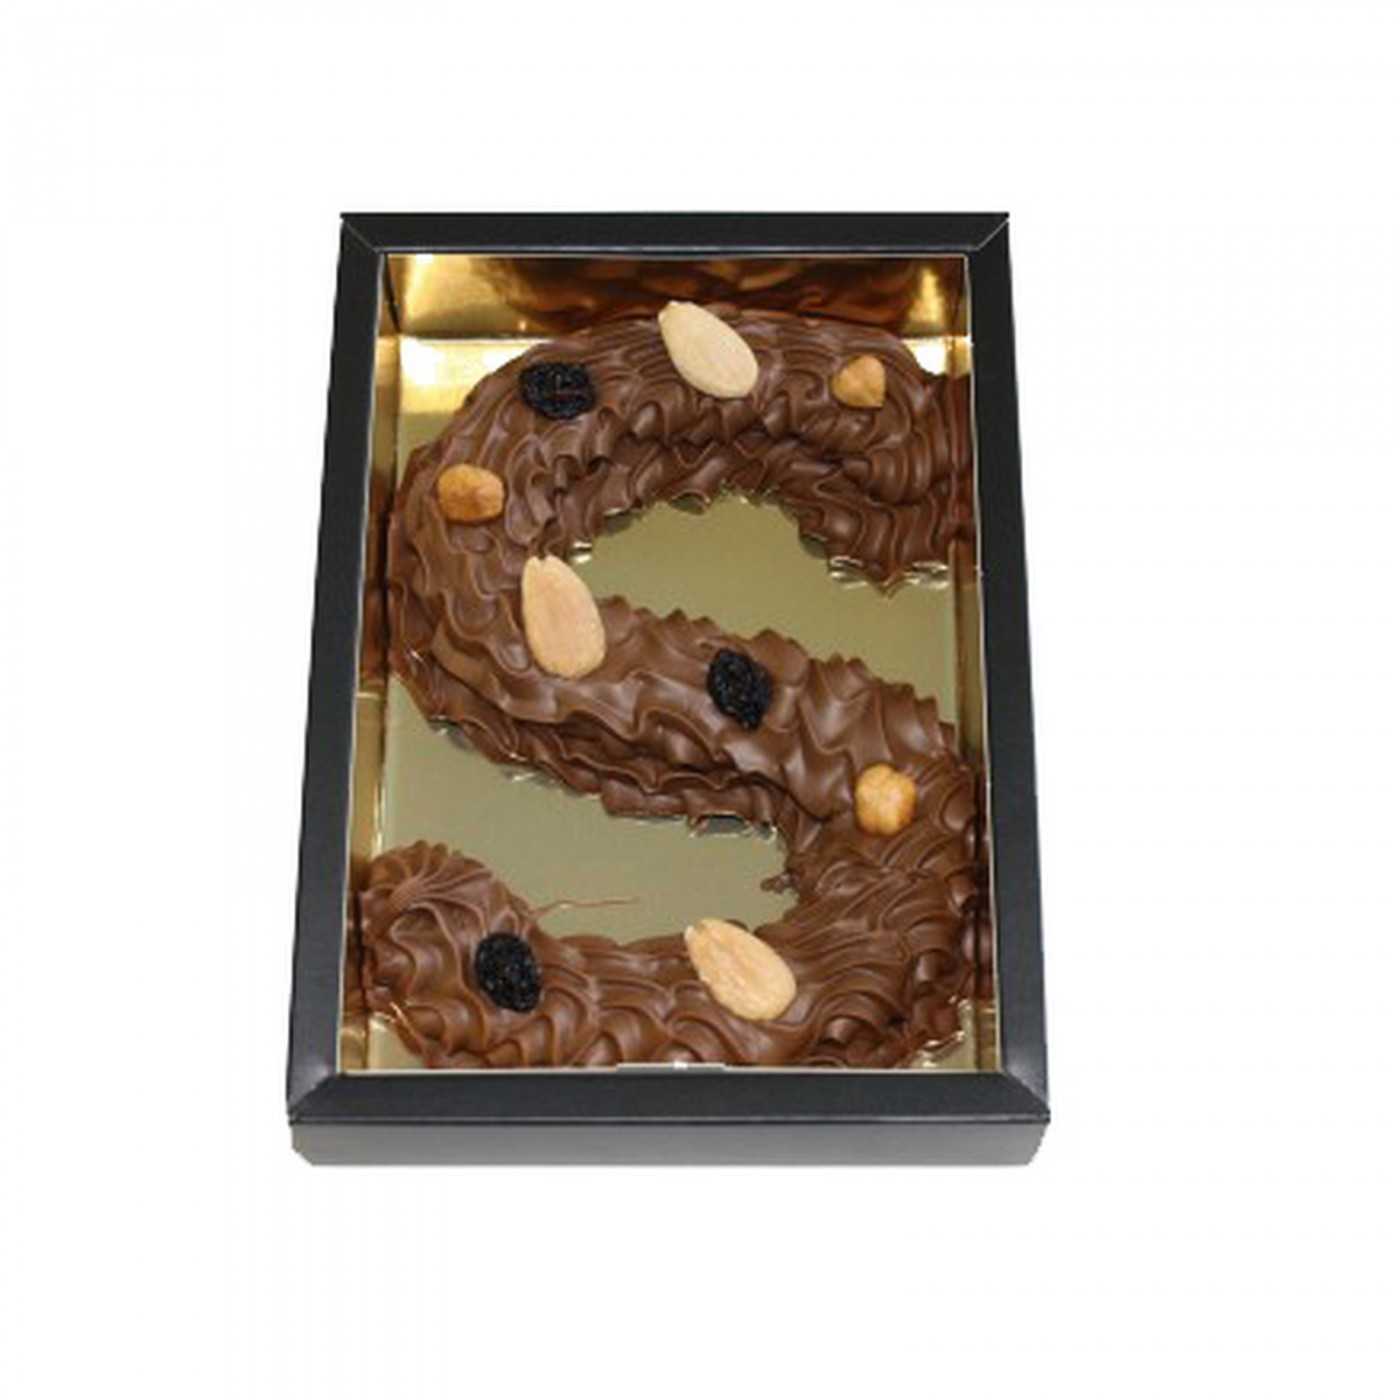 MELK S Chocolade Spuitletter Groot 235g 6st